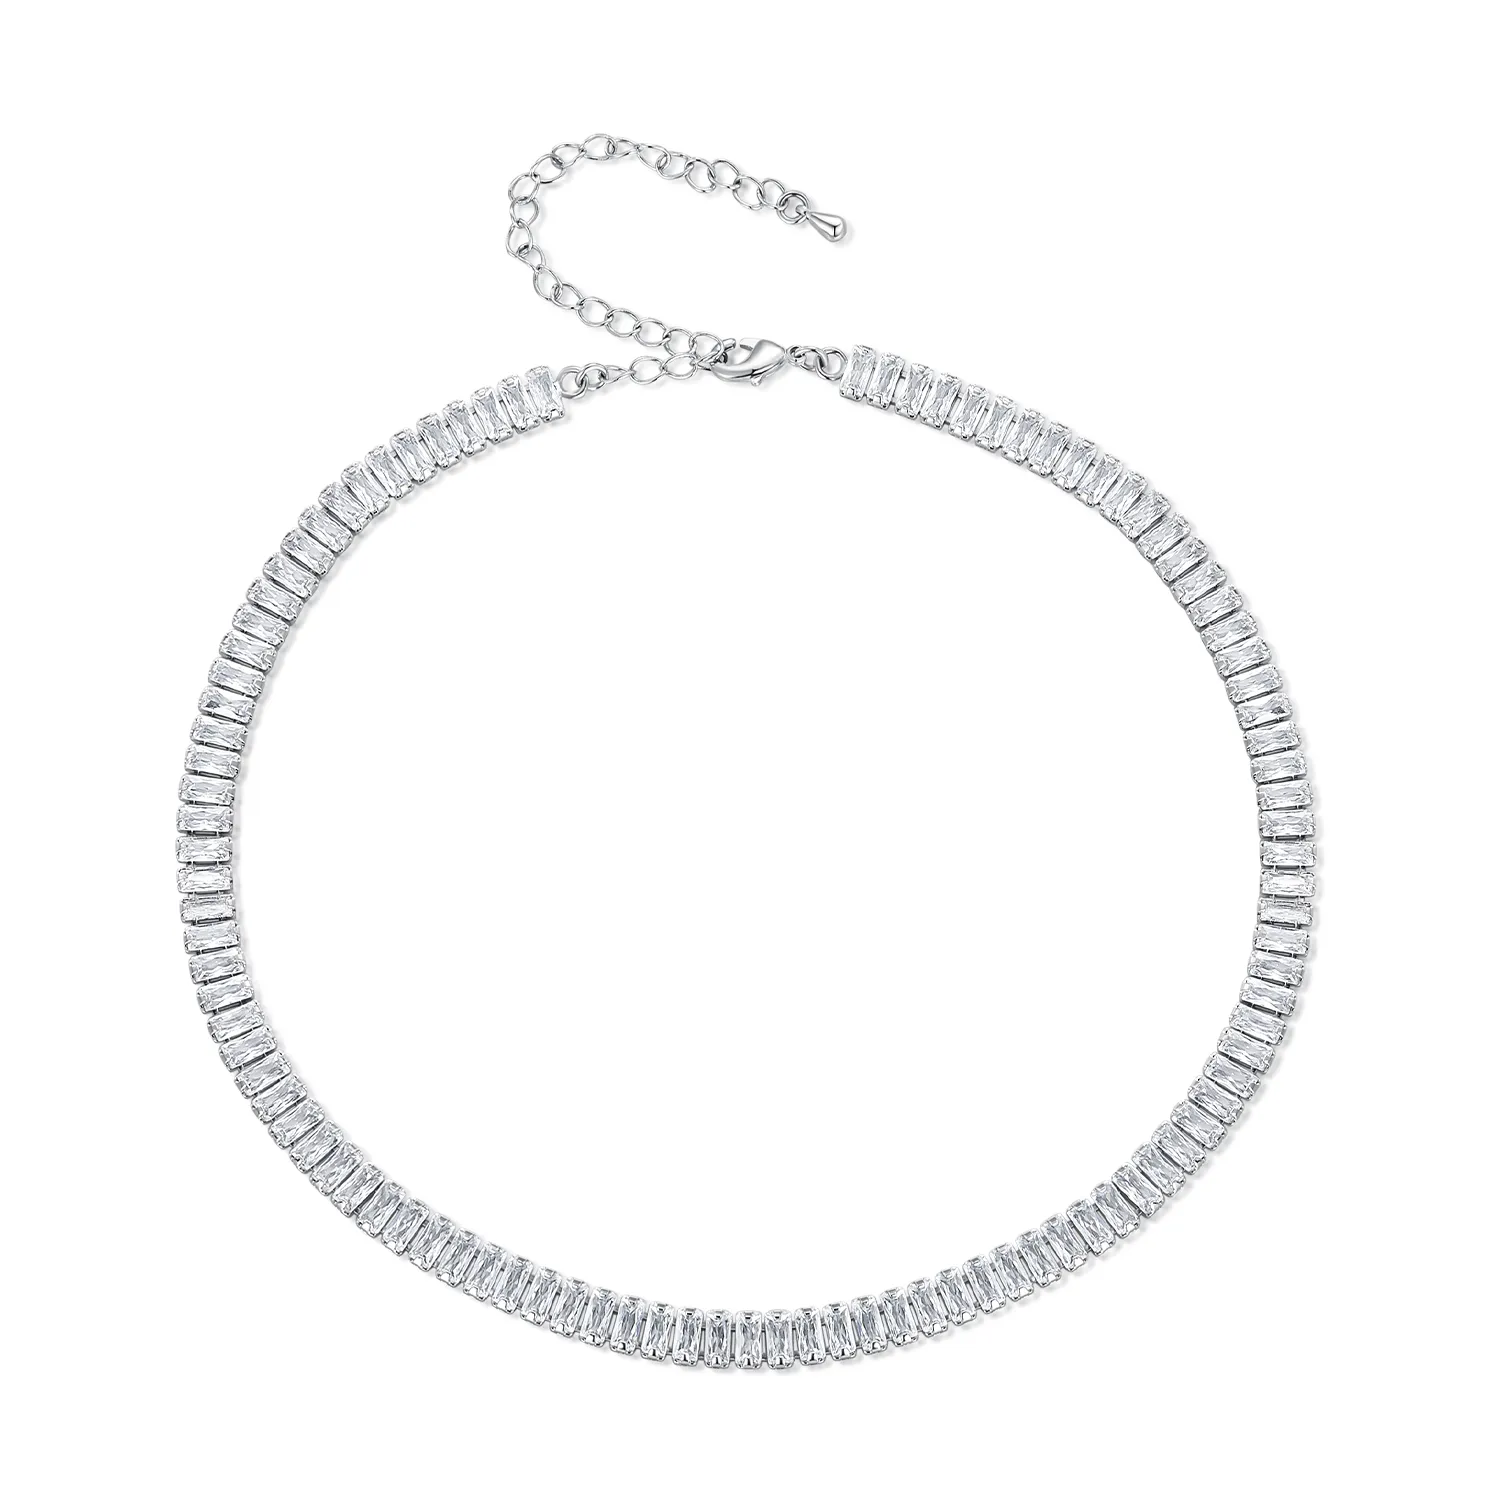 Pandora Style Tennis Necklace - YIN112